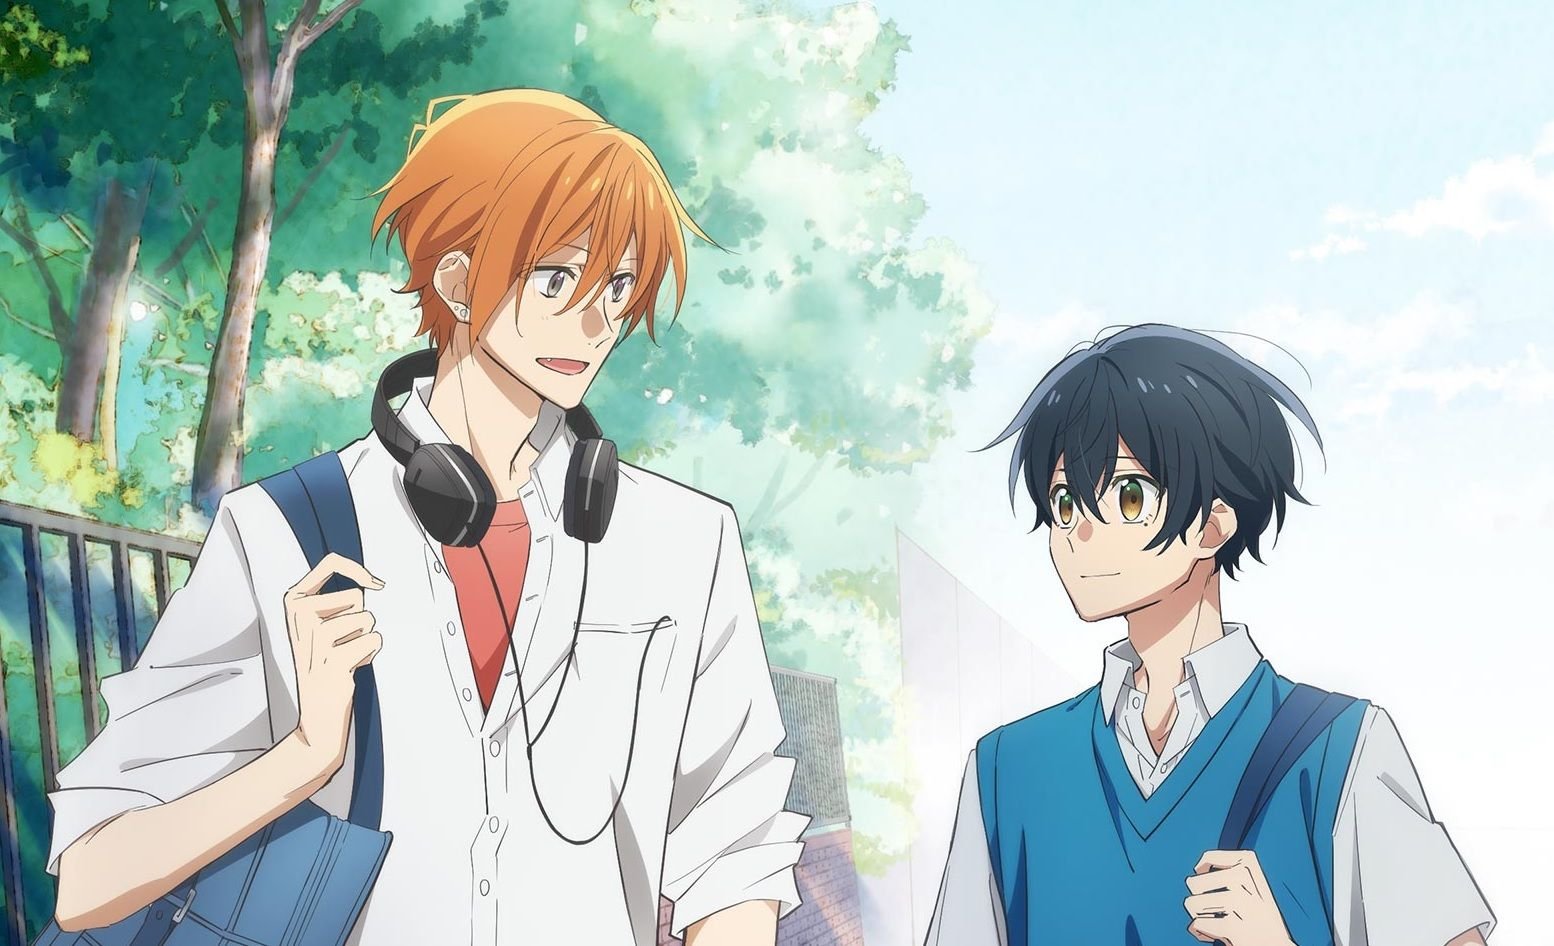 2nd 'Sasaki and Miyano' Anime Episode Previewed